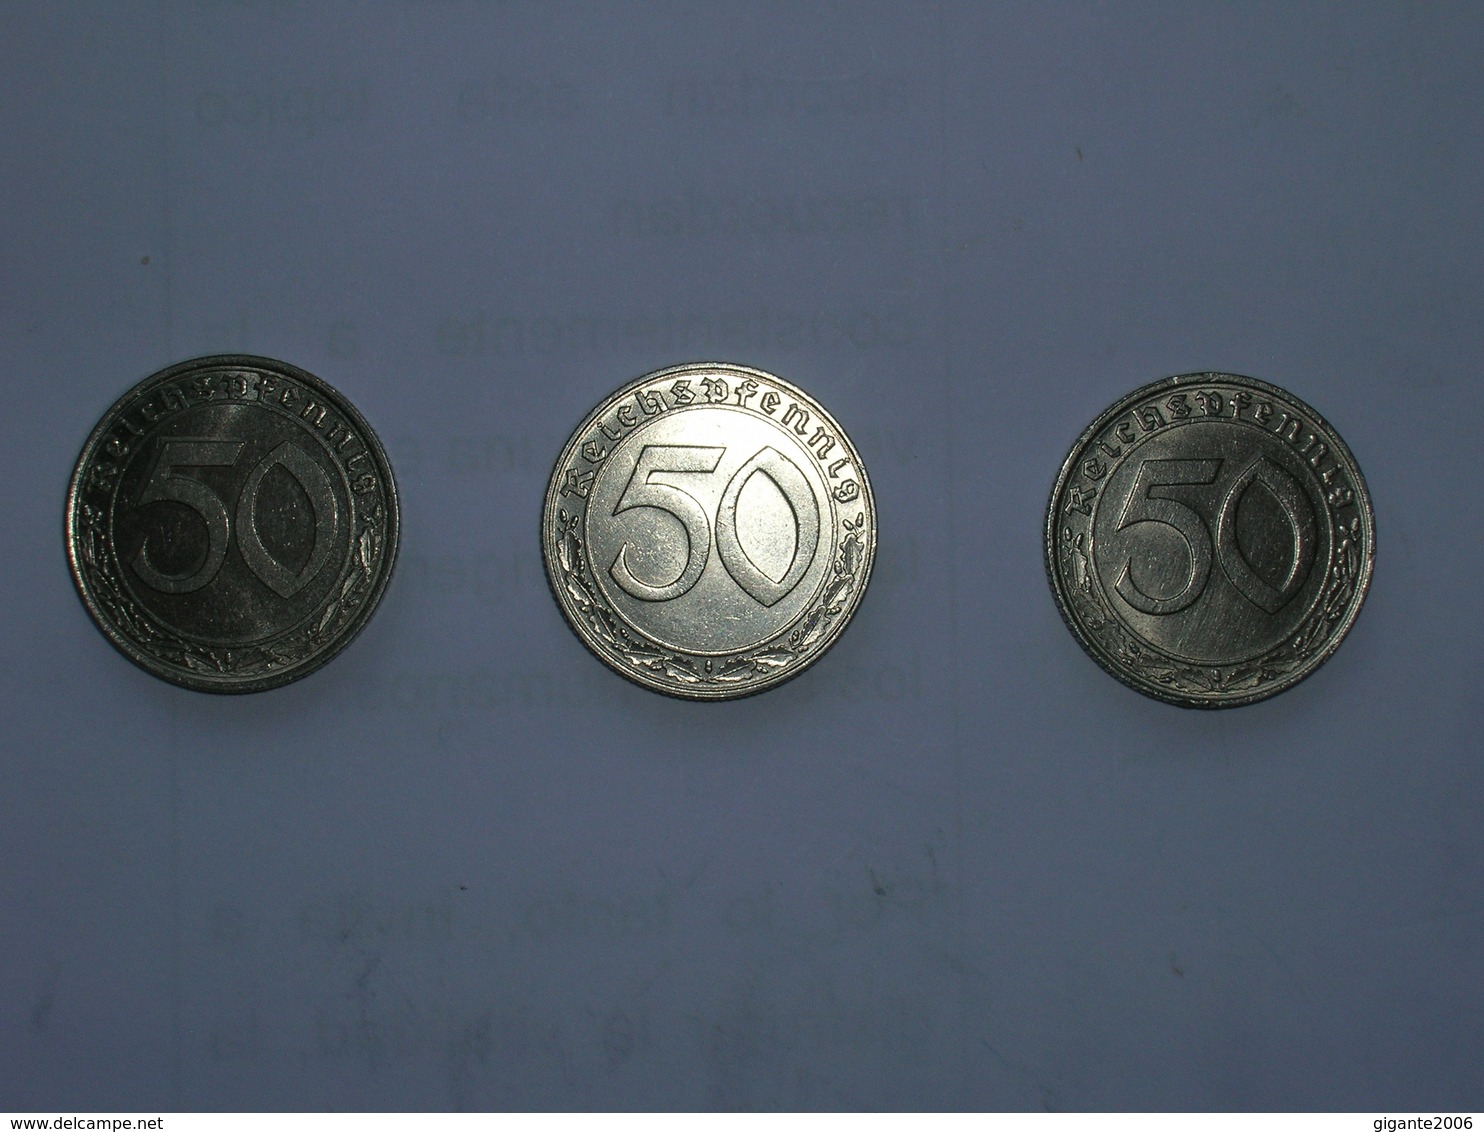 ALEMANIA- 50 PFENNIG. 7 MONEDAS DIFERENTES 1939, CECAS A, B, D, E, F, G Y J. Km 95 (836) - 50 Reichspfennig